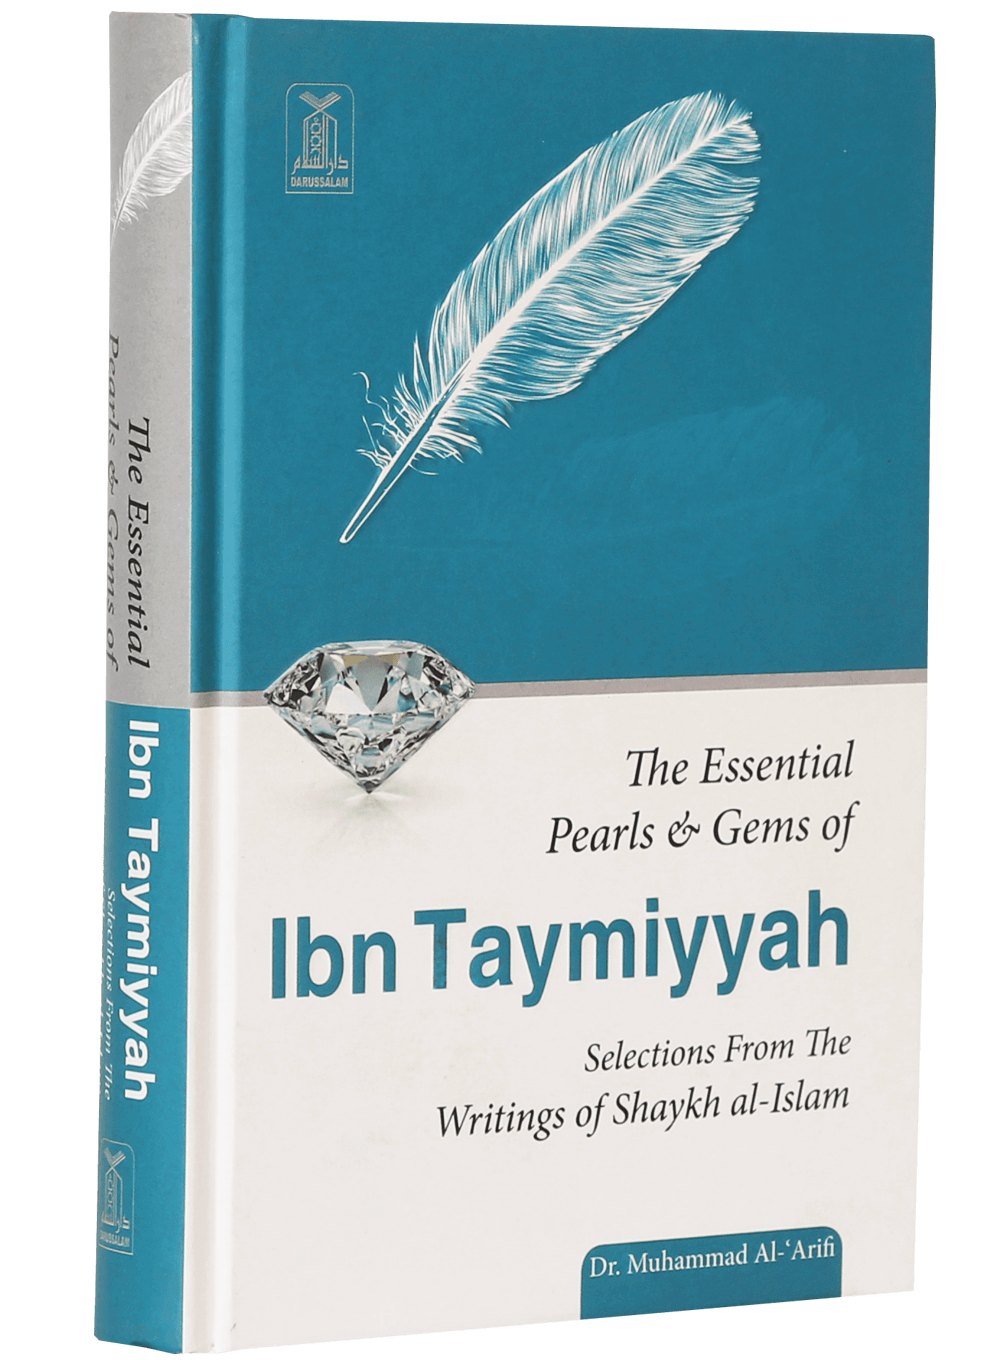 darussalam-2017-11-01-15-27-32the-essential-pearls-gems-of-ibn-taymiyyah-2